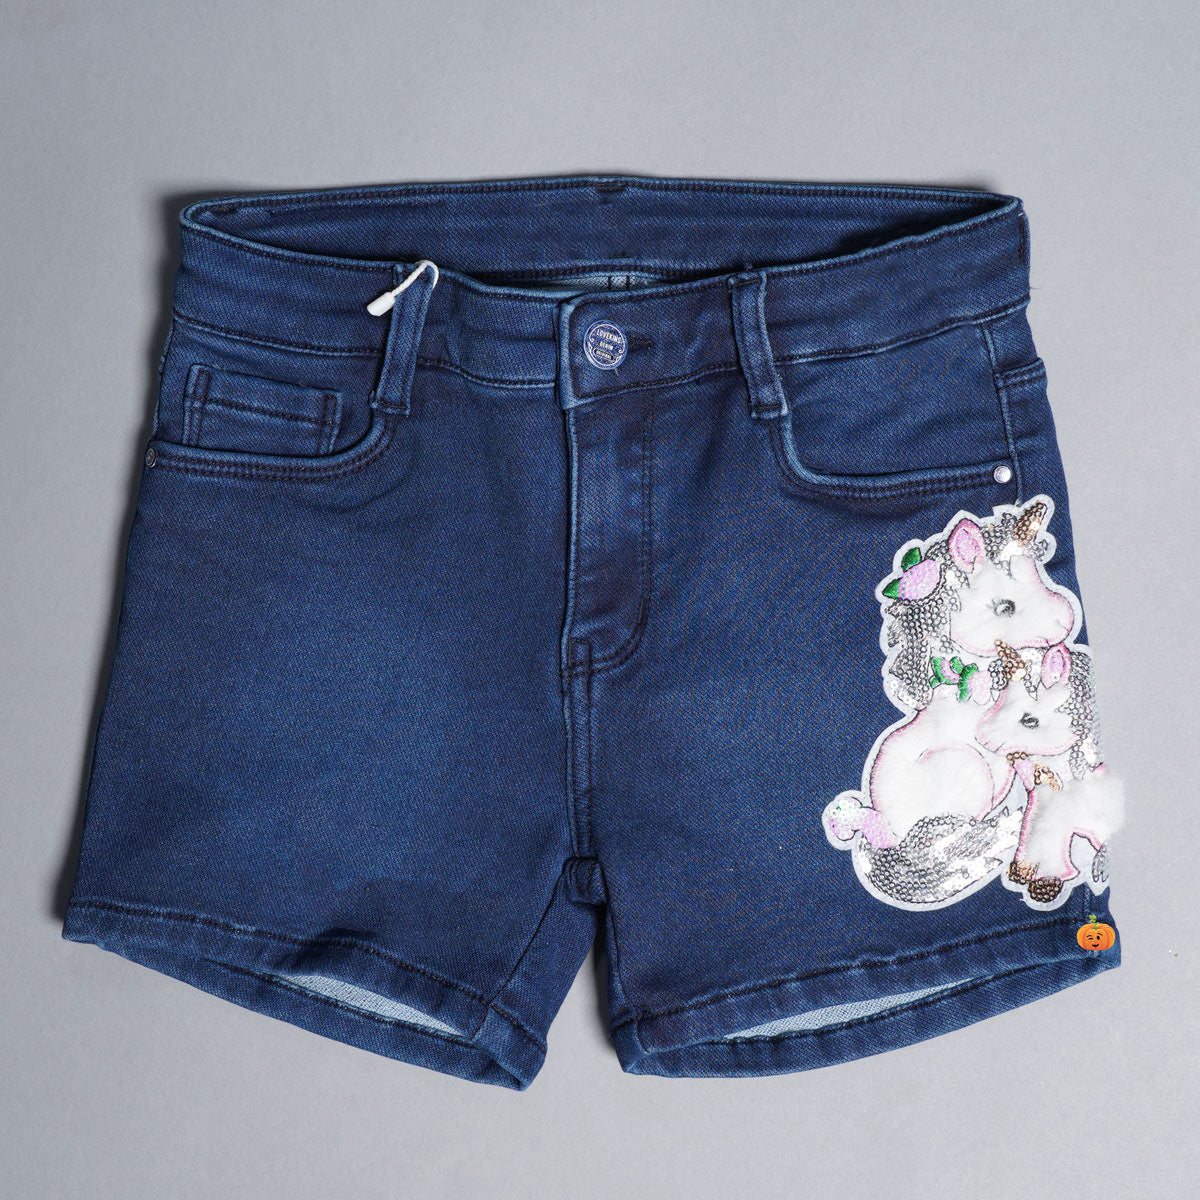 Buy Rubugil Womens Denim Shorts Stretchy Ripped Jean Shorts High Waisted  Folded Hem Frayed Distressed Hot Shorts, Dark Blue-2, M at Amazon.in